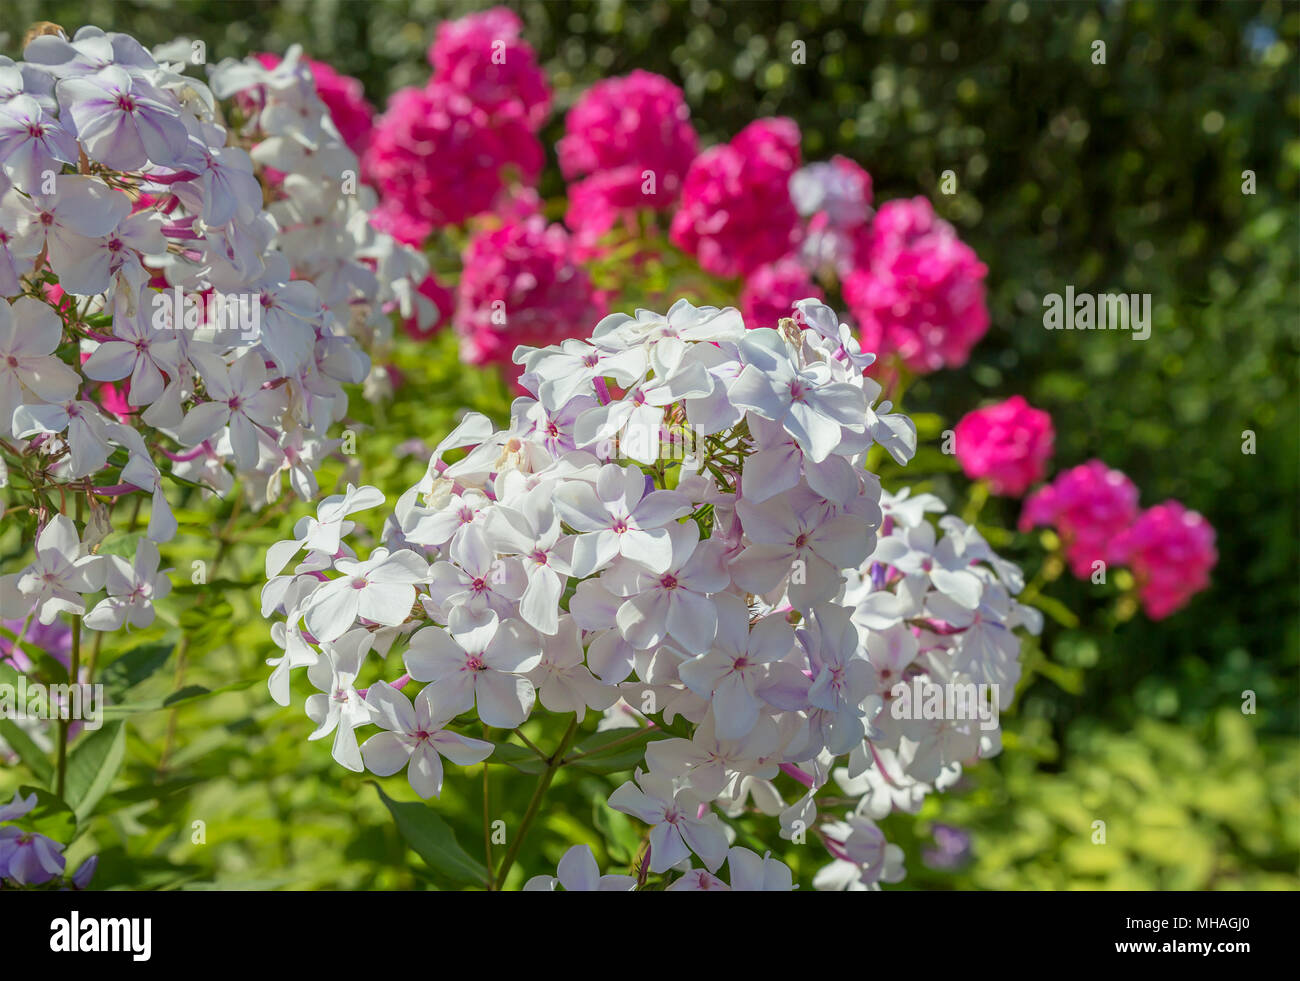 Phlox Paniculata or Garden Phlox in bloom. Stock Photo